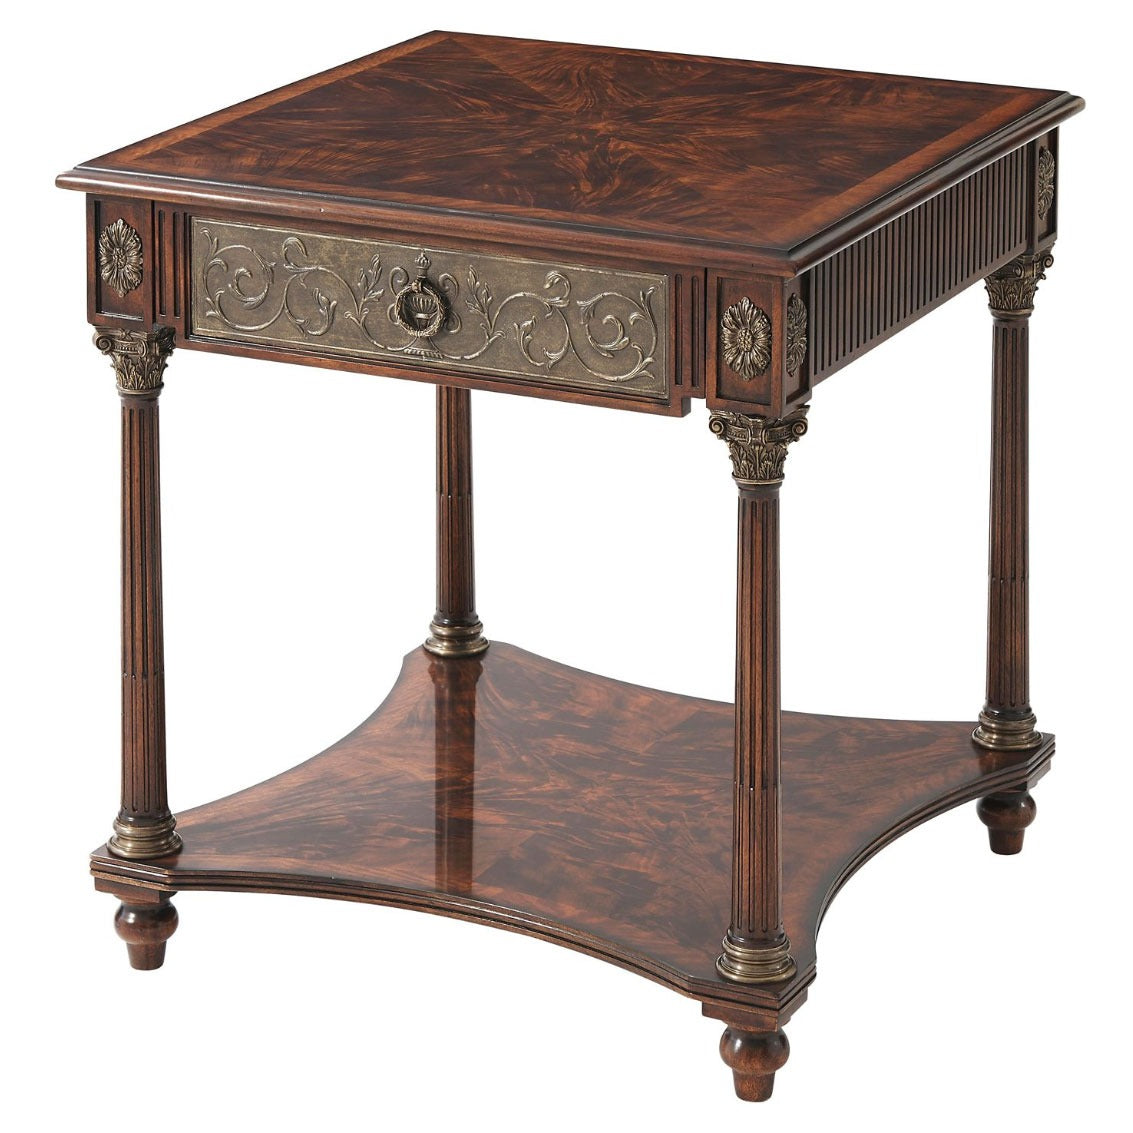 Crotch mahogany lamp or side table